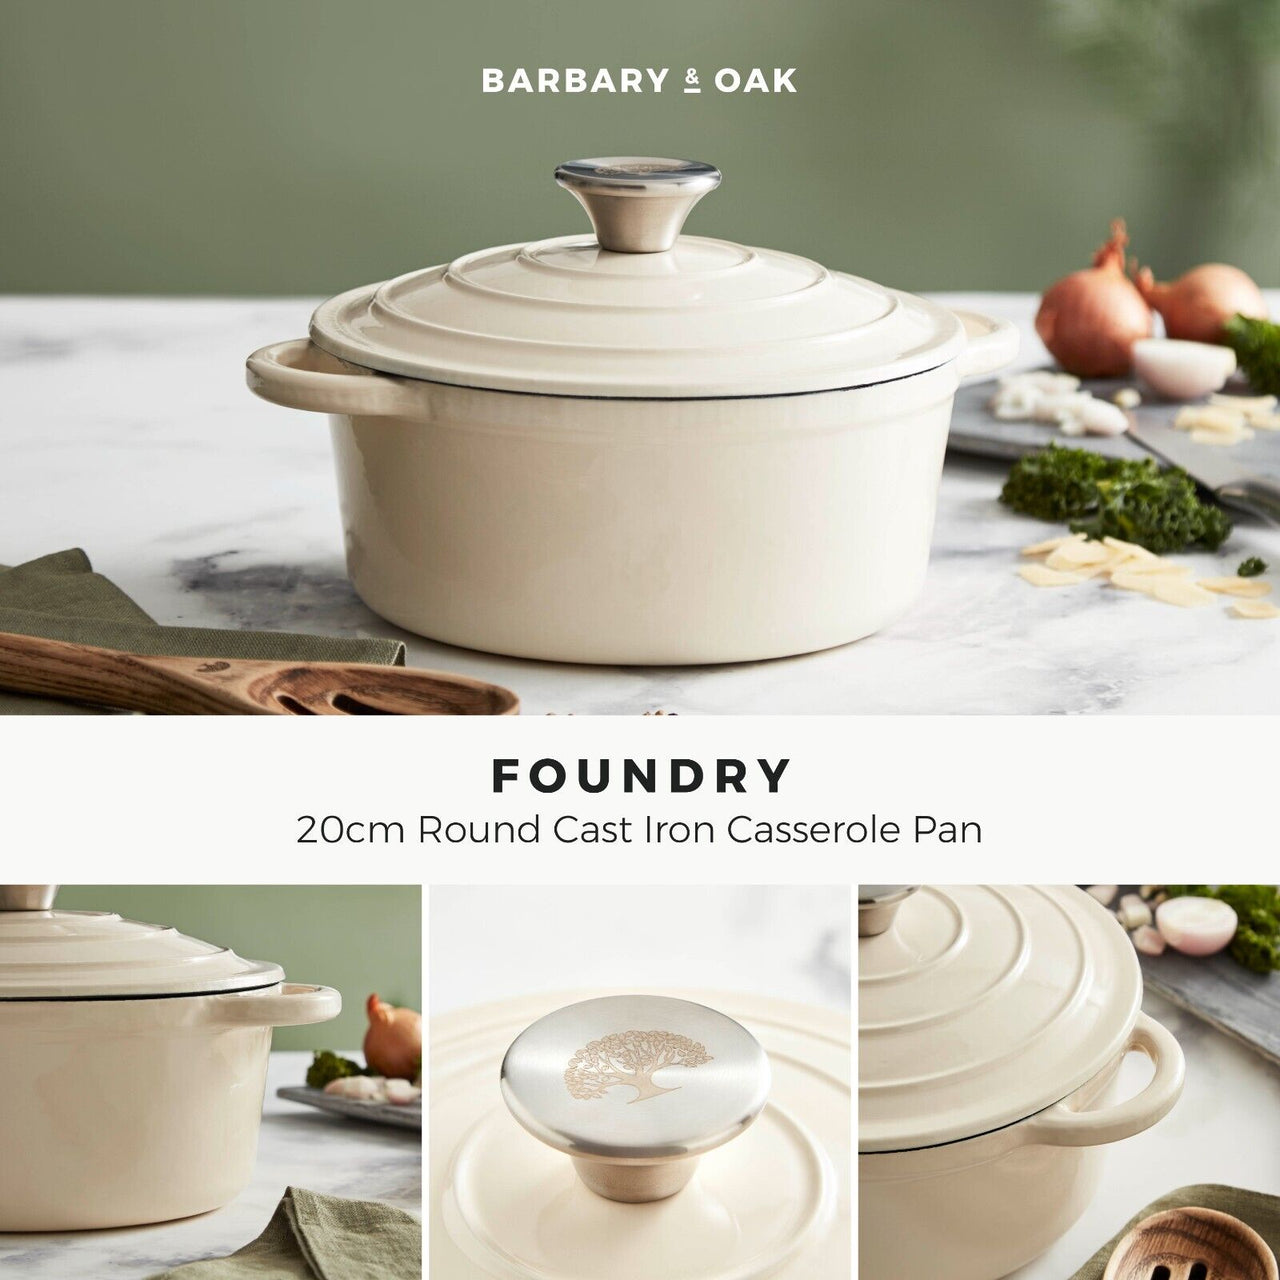 Barbary & Oak Foundry 20cm Round Casserole Pan Cast Iron in Camembert Cream